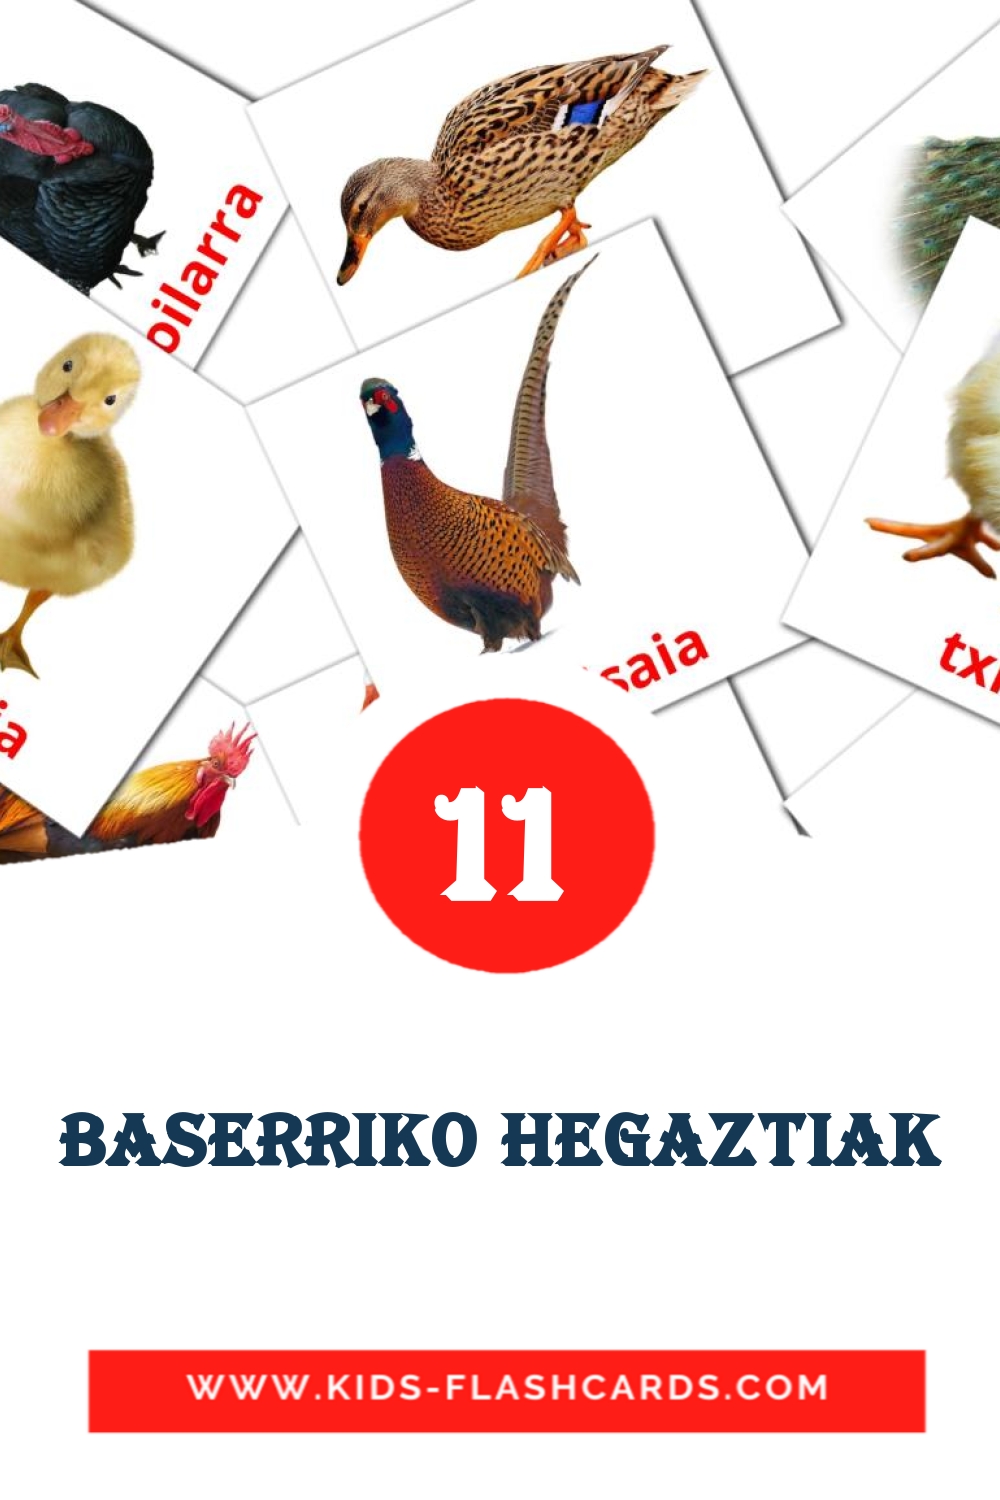 11 carte illustrate di Baserriko hegaztiak per la scuola materna in basco